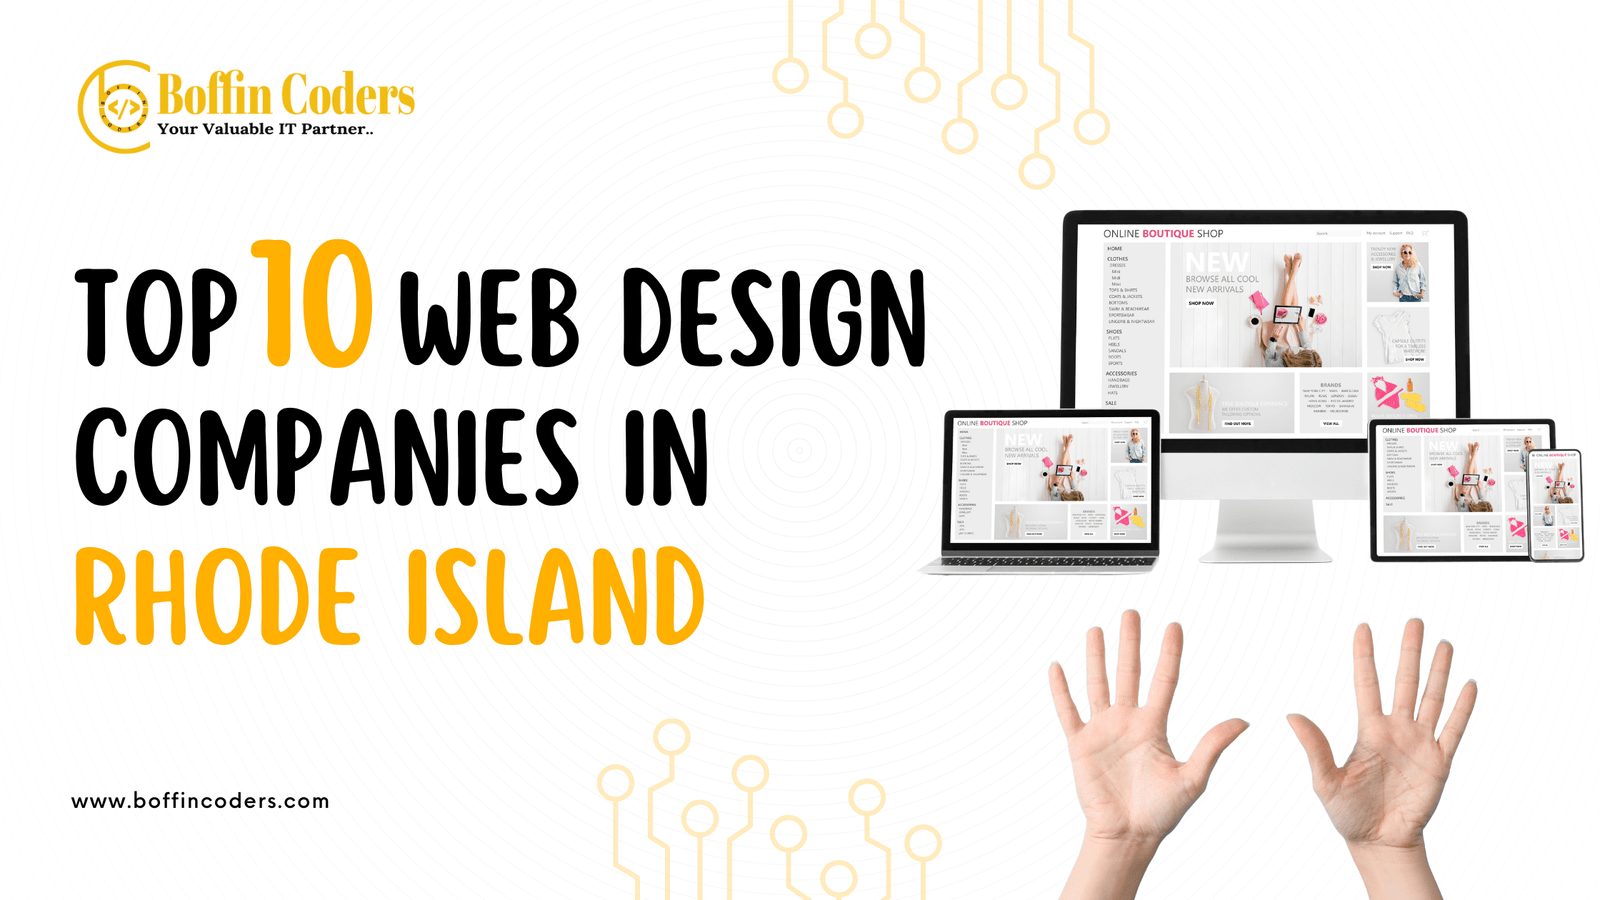 Top 10 Web Design Companies in Rhode Island